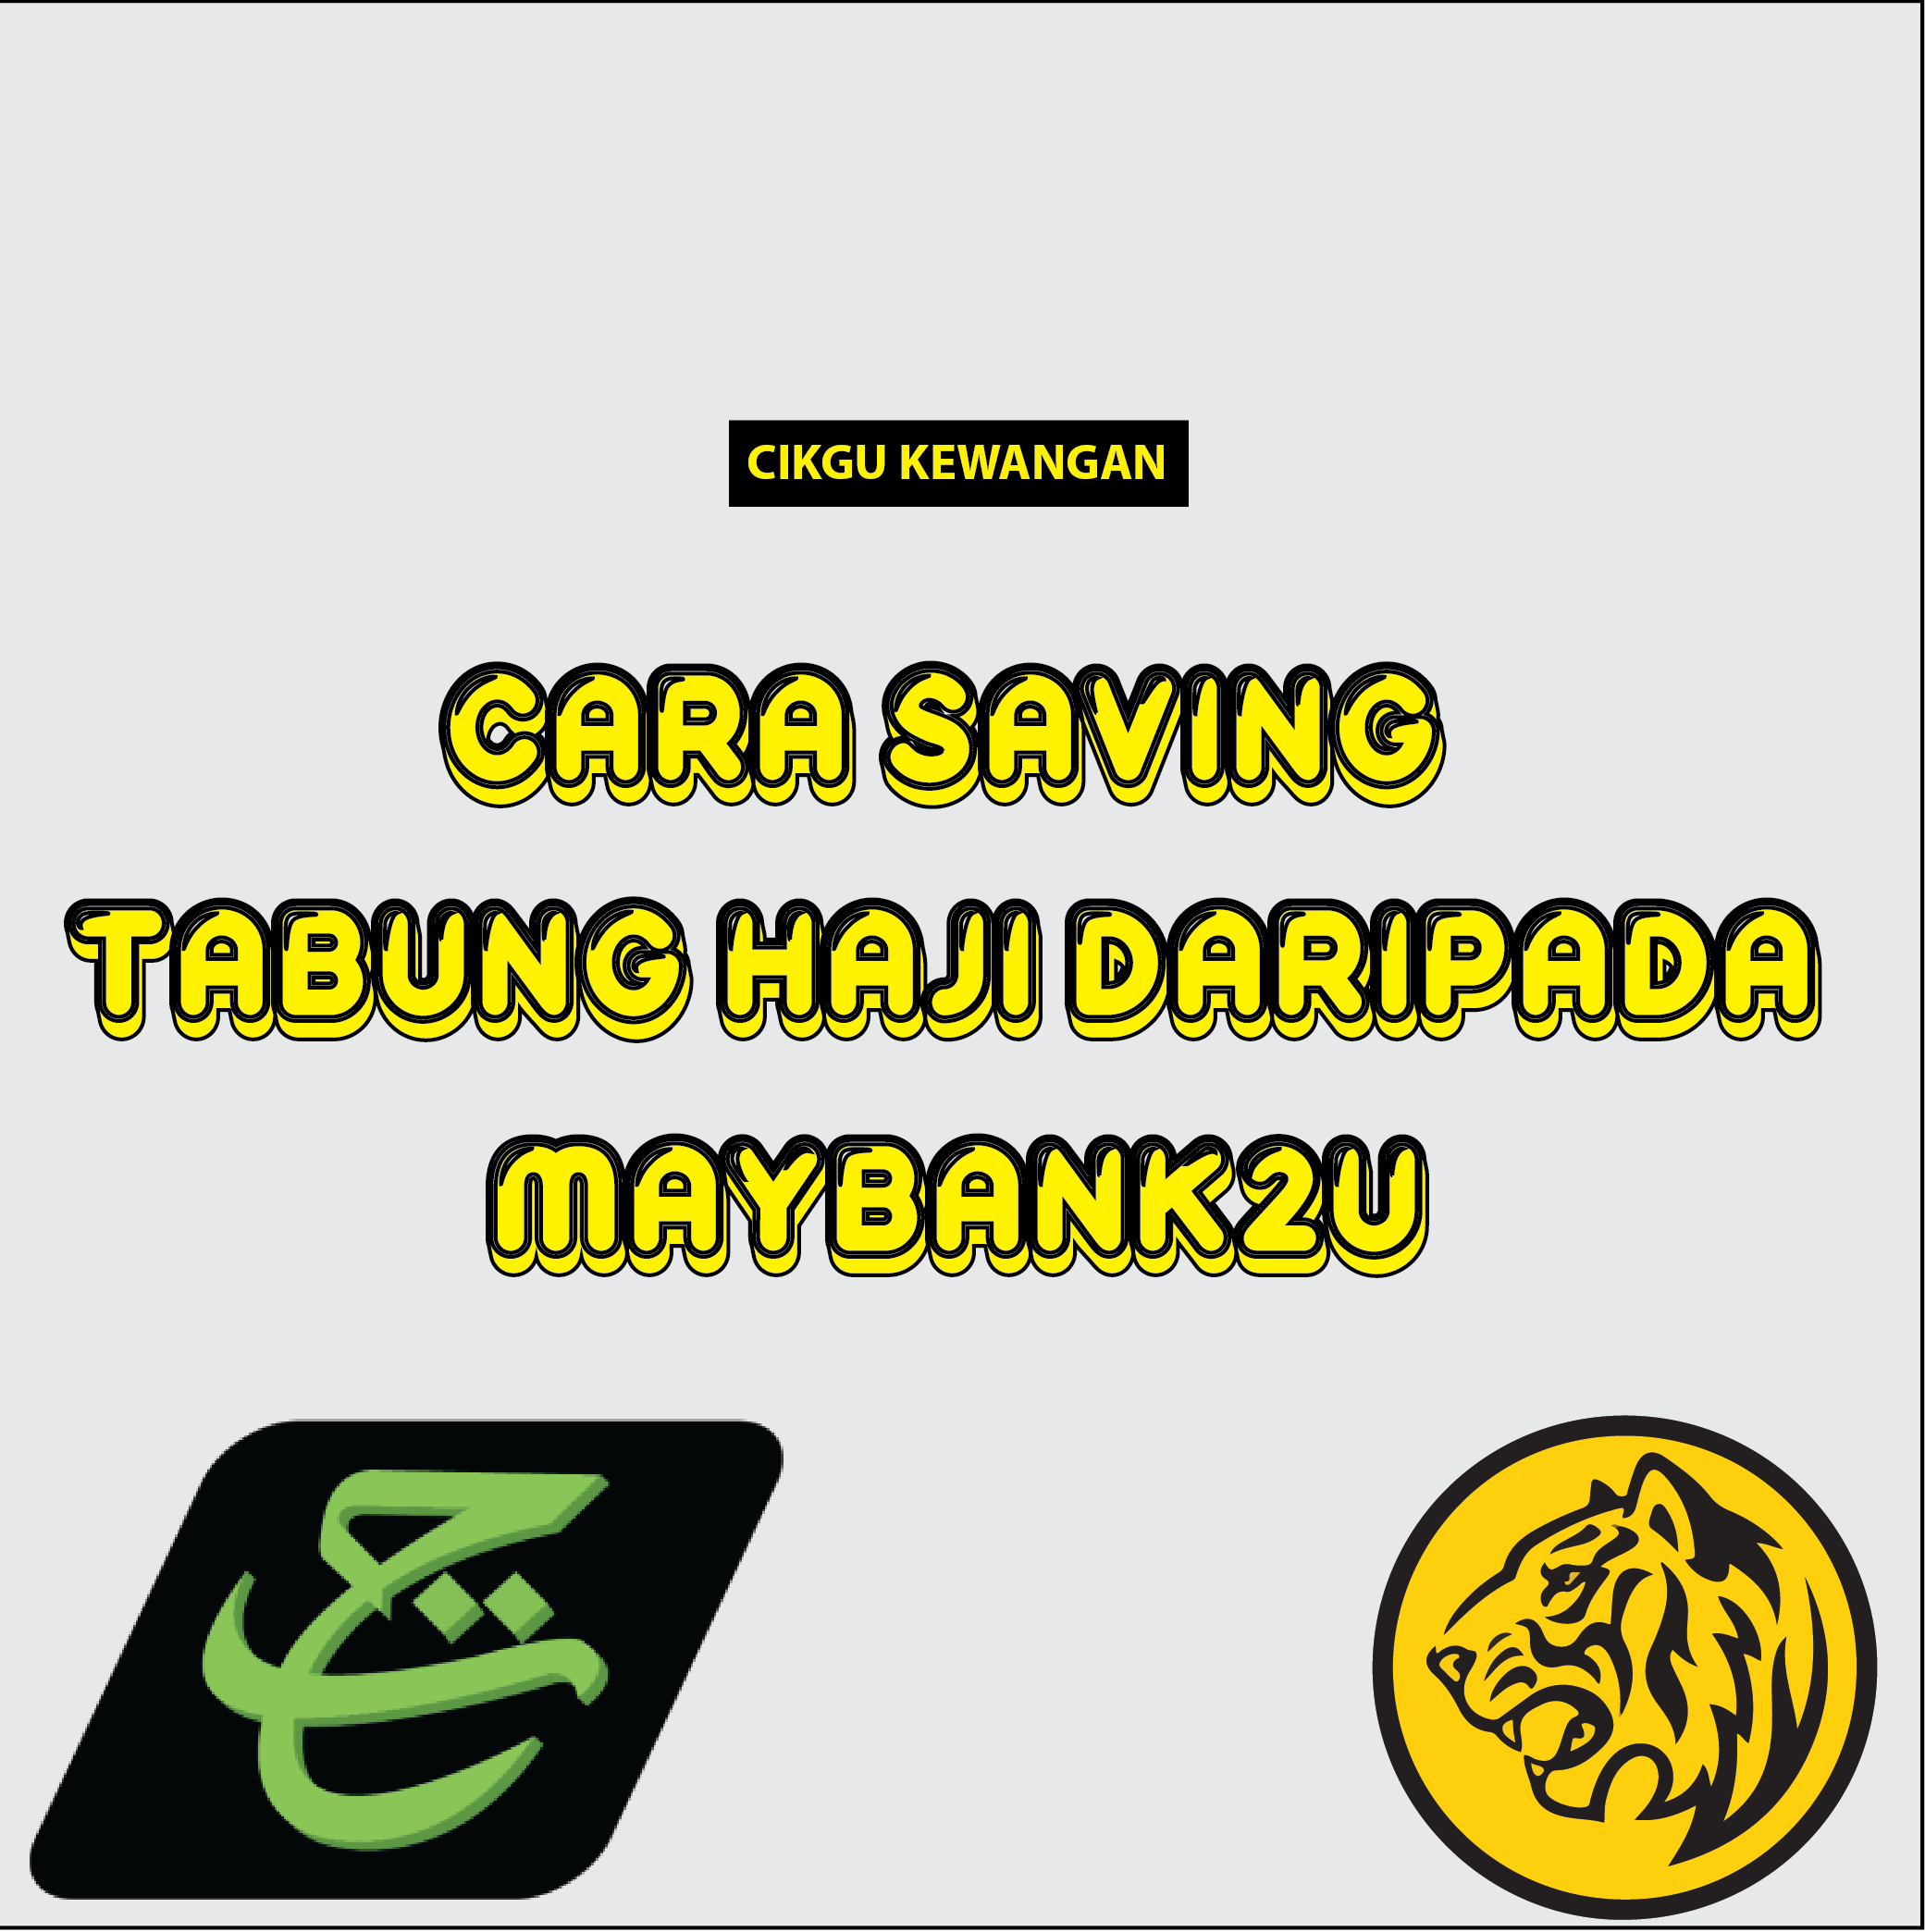 How to check tabung haji in maybank2u